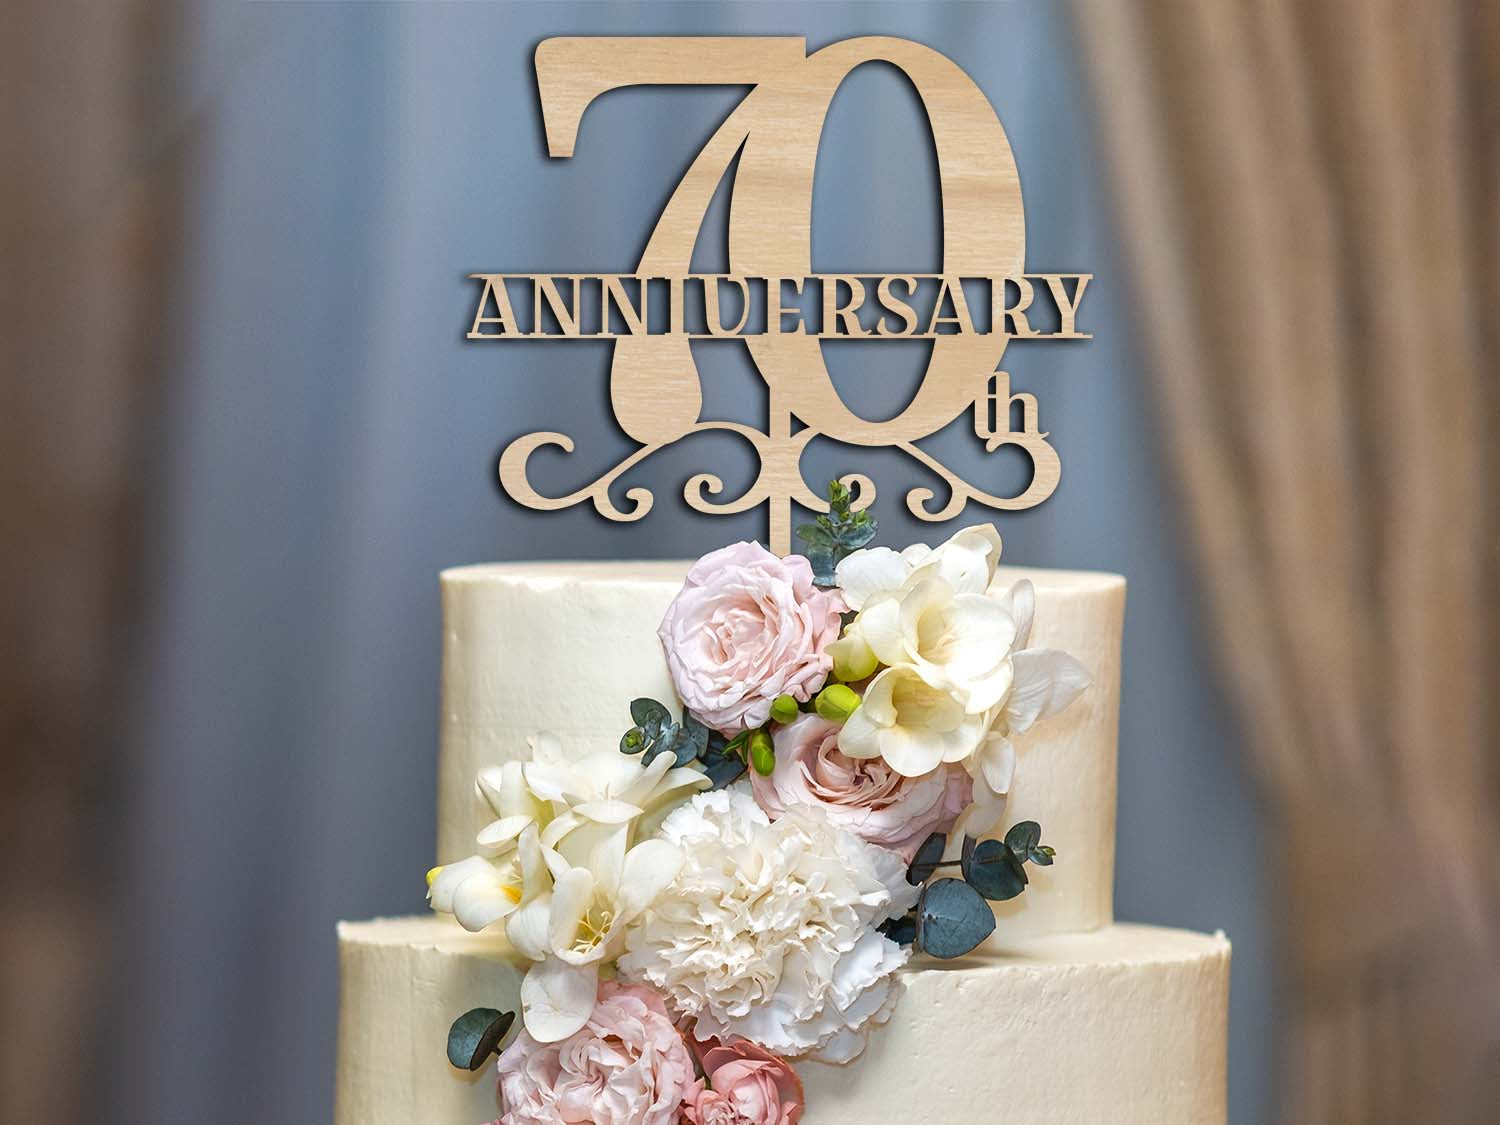 70th Anniversary Cake Topper